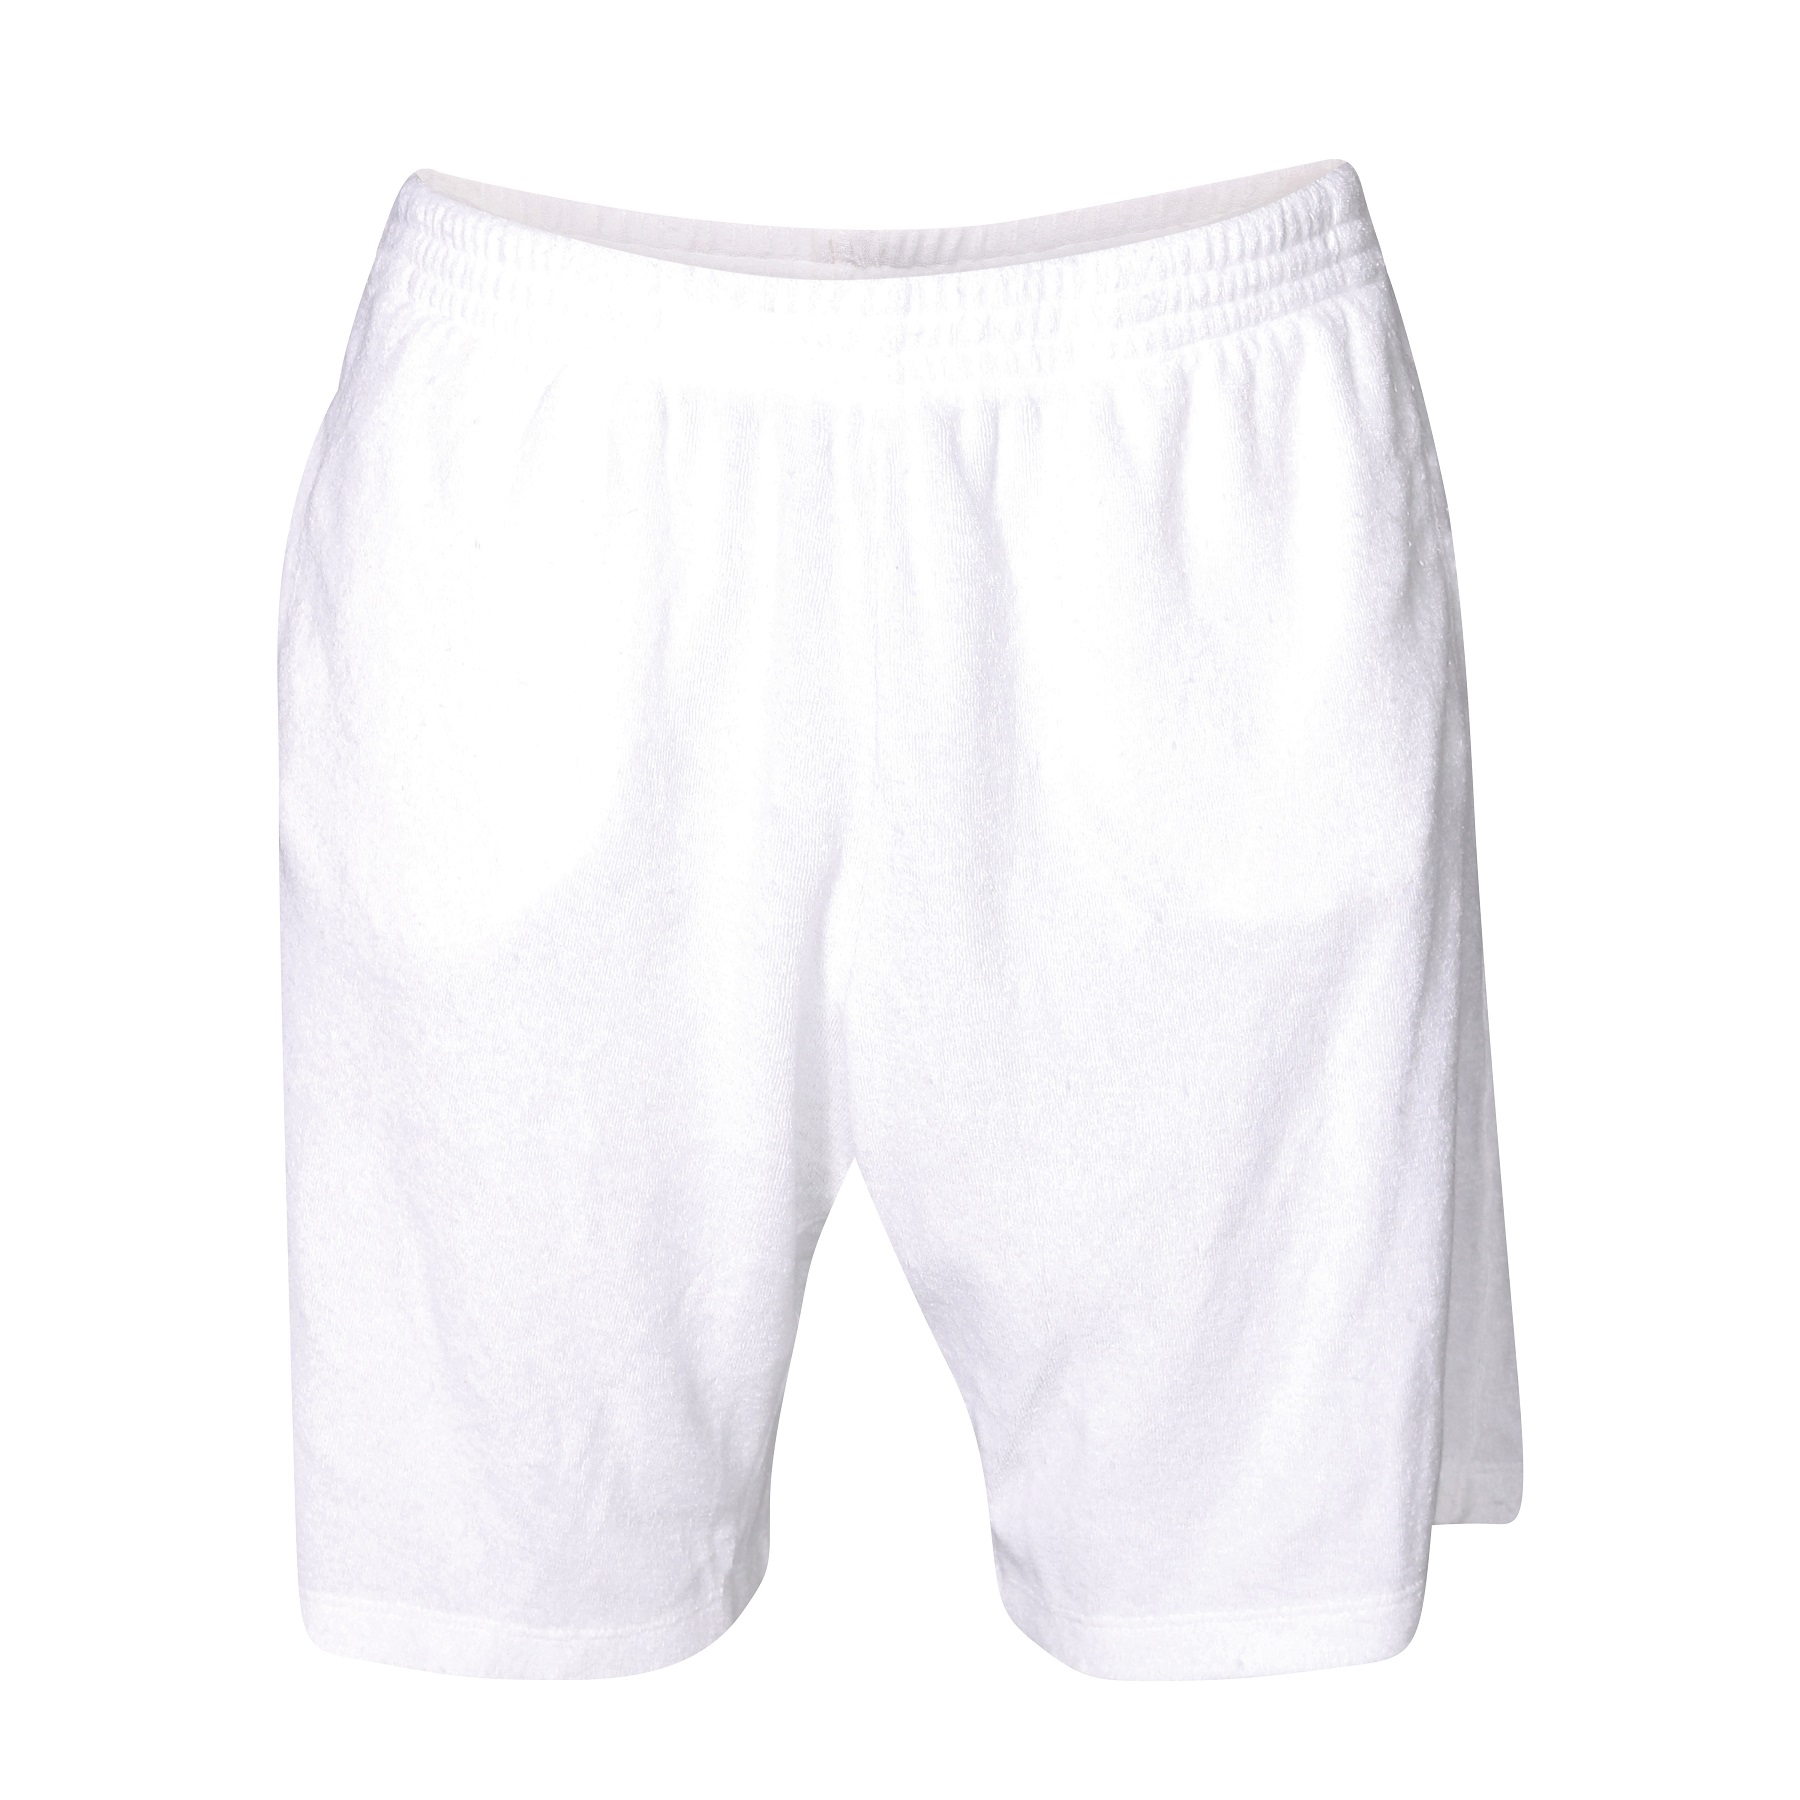 JASPER LOS ANGELES Terry Shorts Venice in White XL